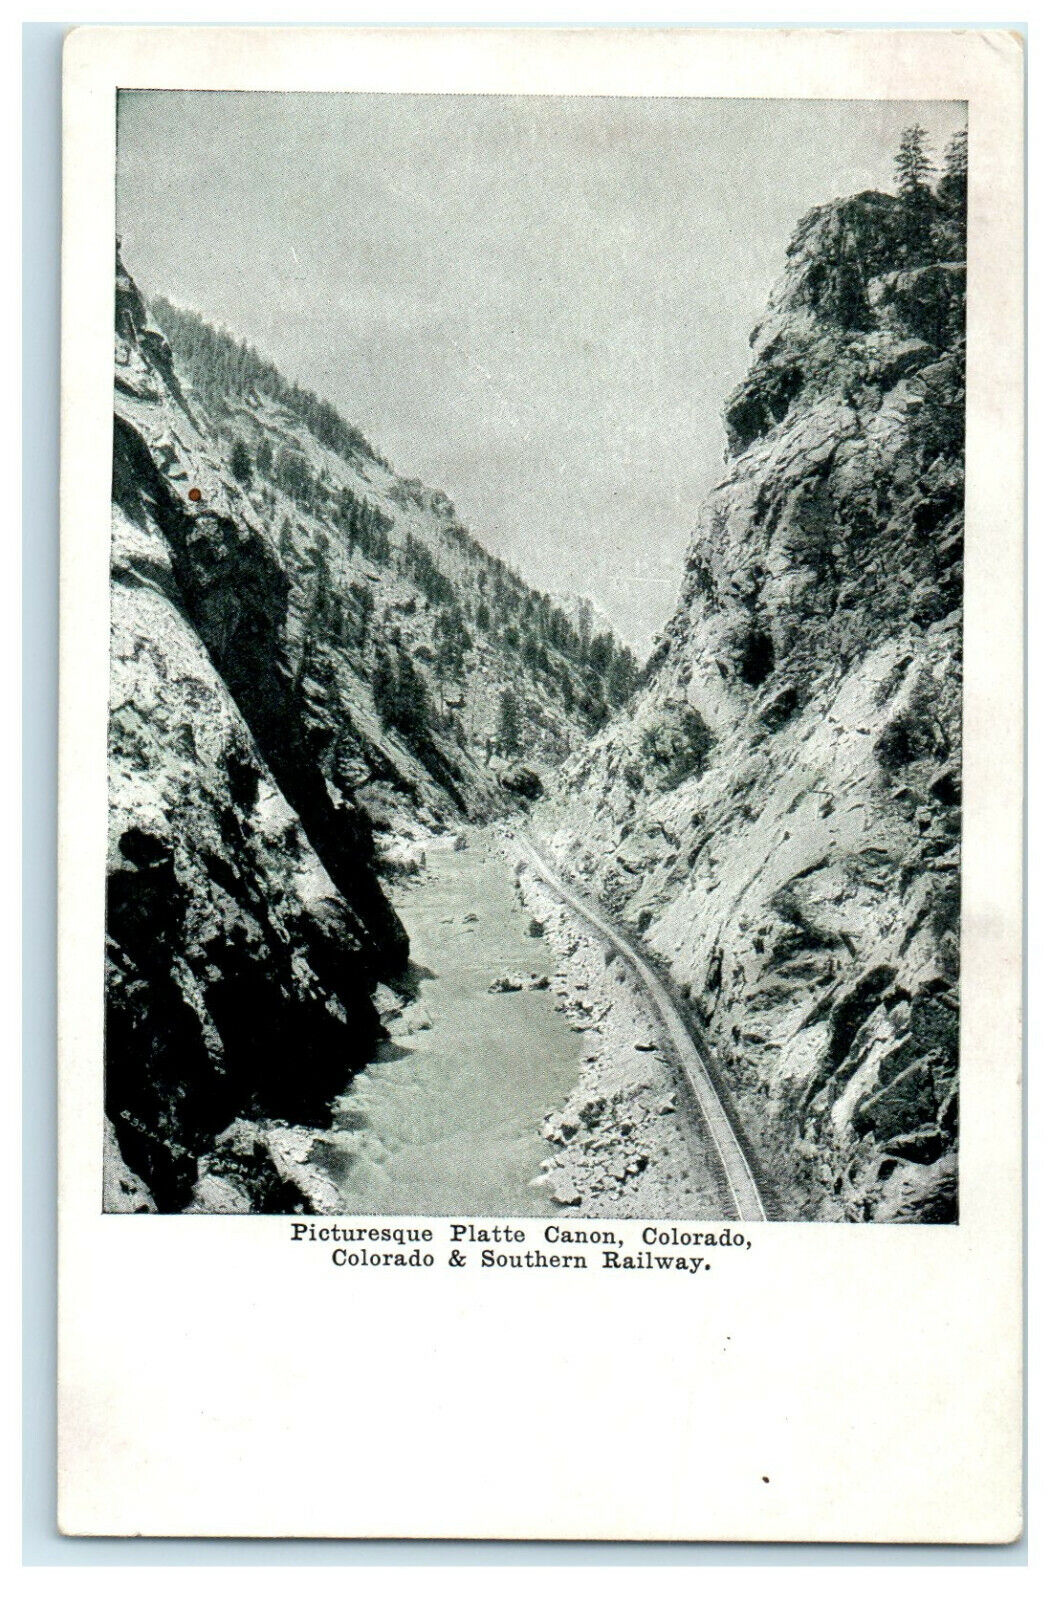 c1905s Picturesque Platte Canon, Southern Railway & Colorado CO Postcard